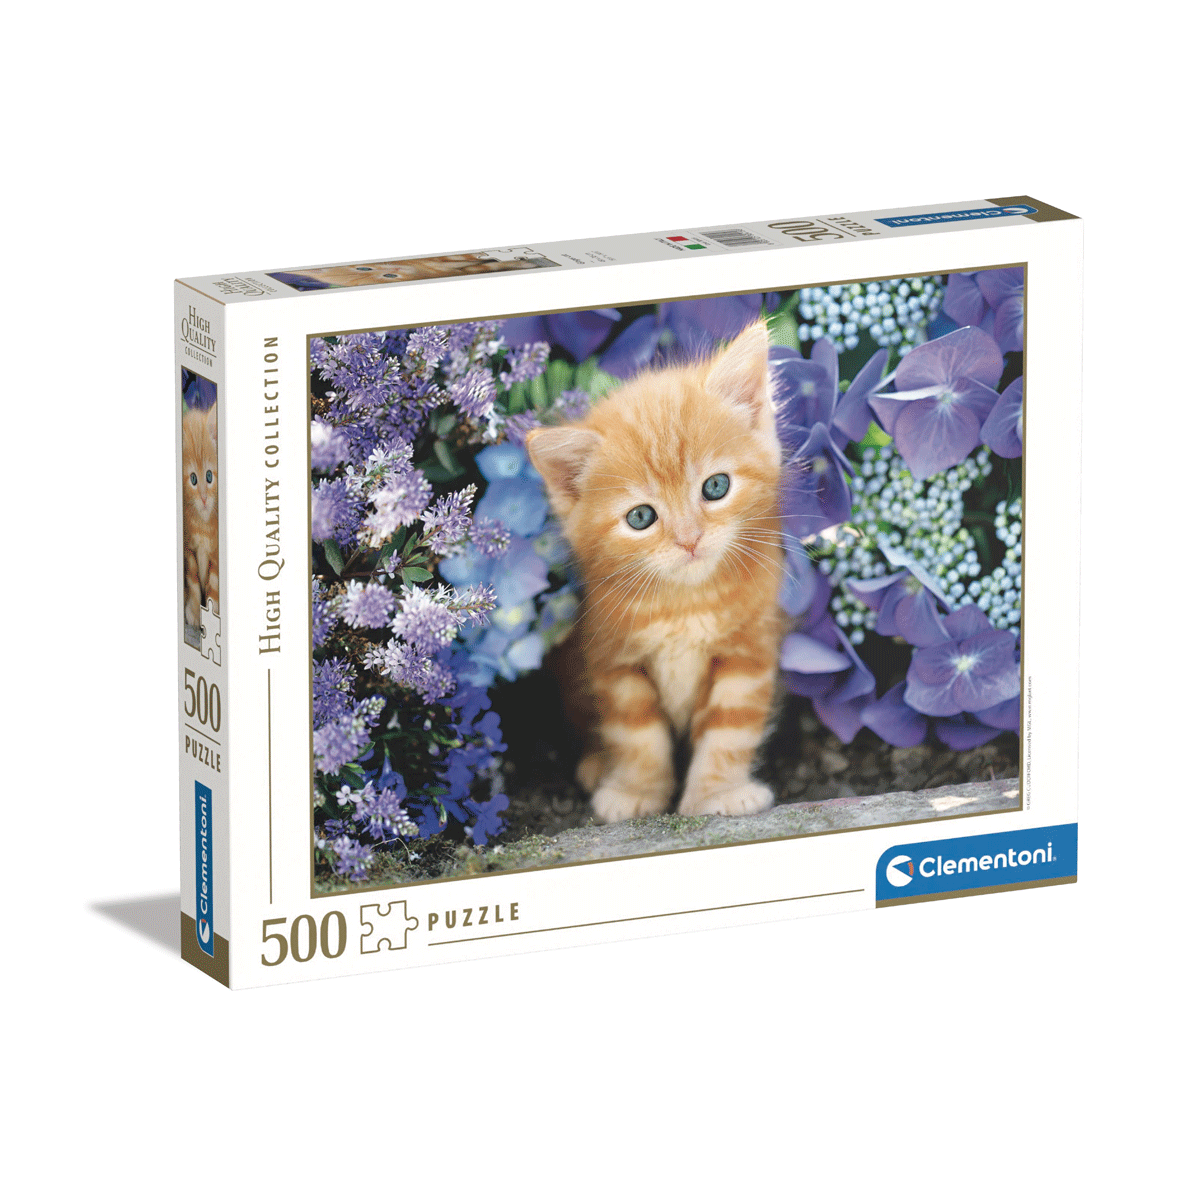 Clementoni puzzle high quality collection - ginger cat - 500 pezzi, puzzle adulti - CLEMENTONI